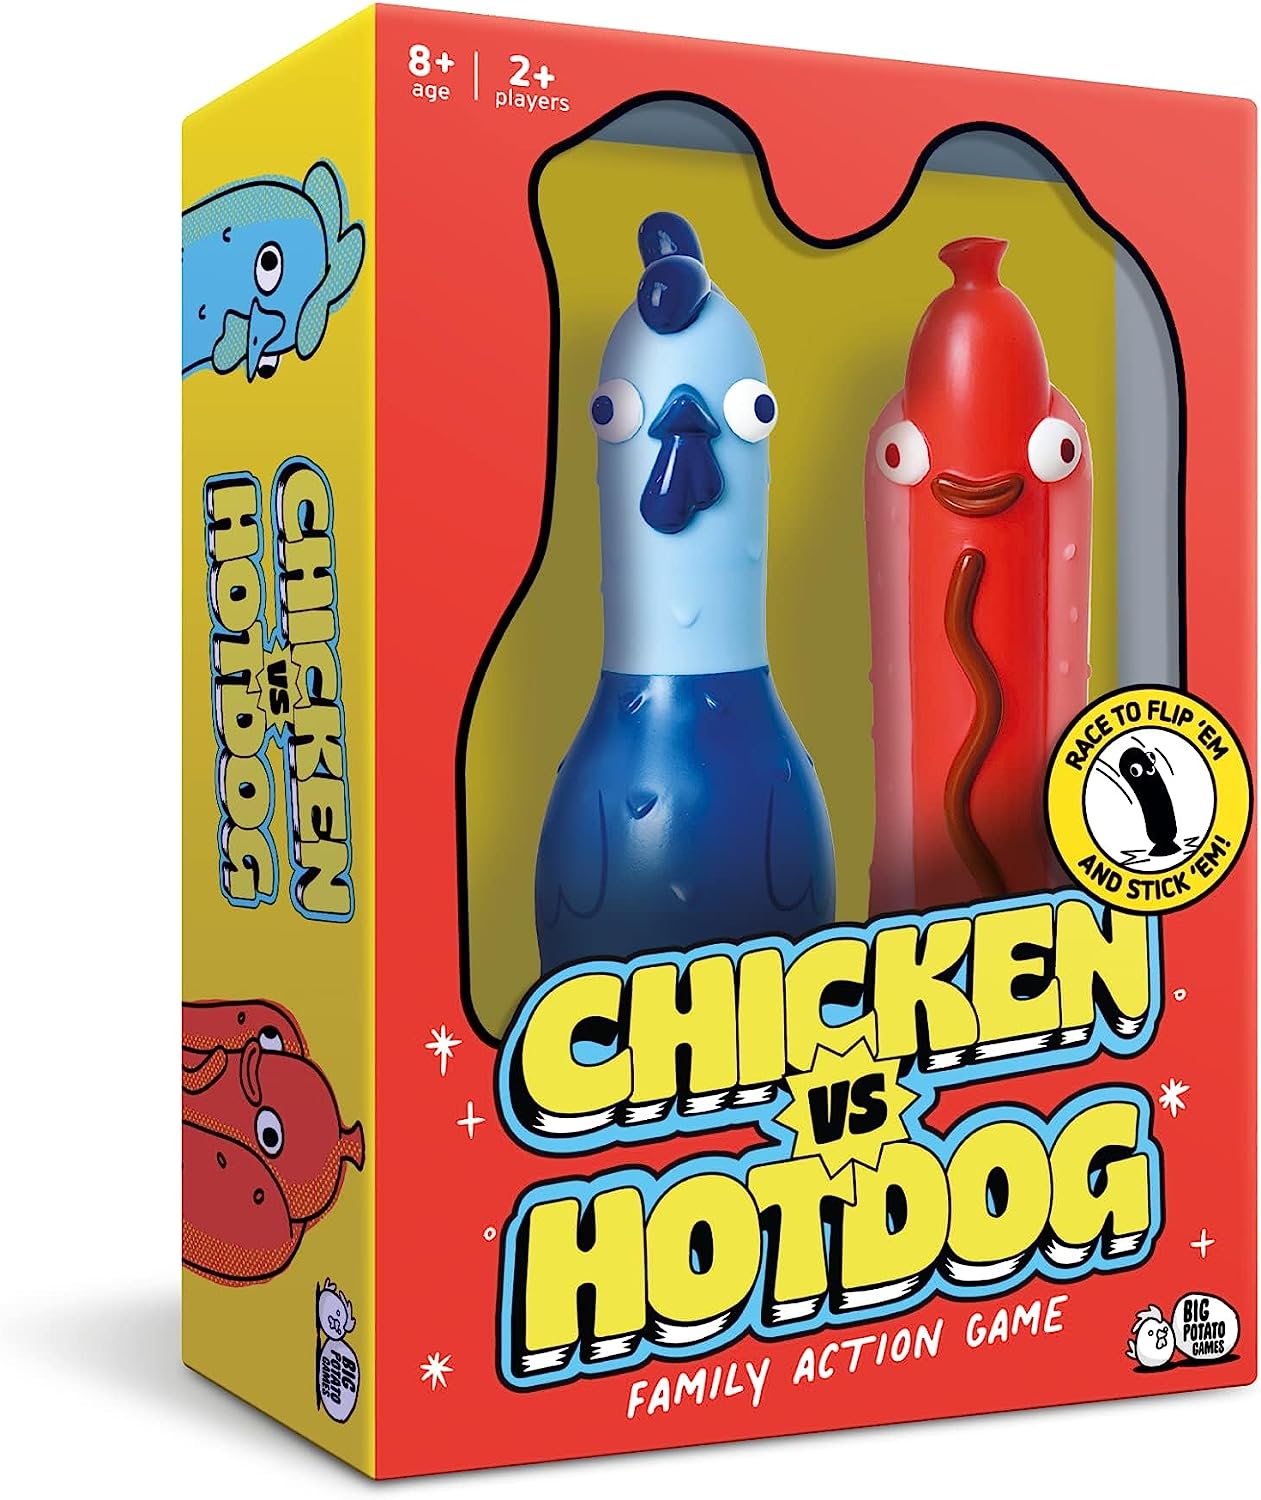 chicken vs. hotdog